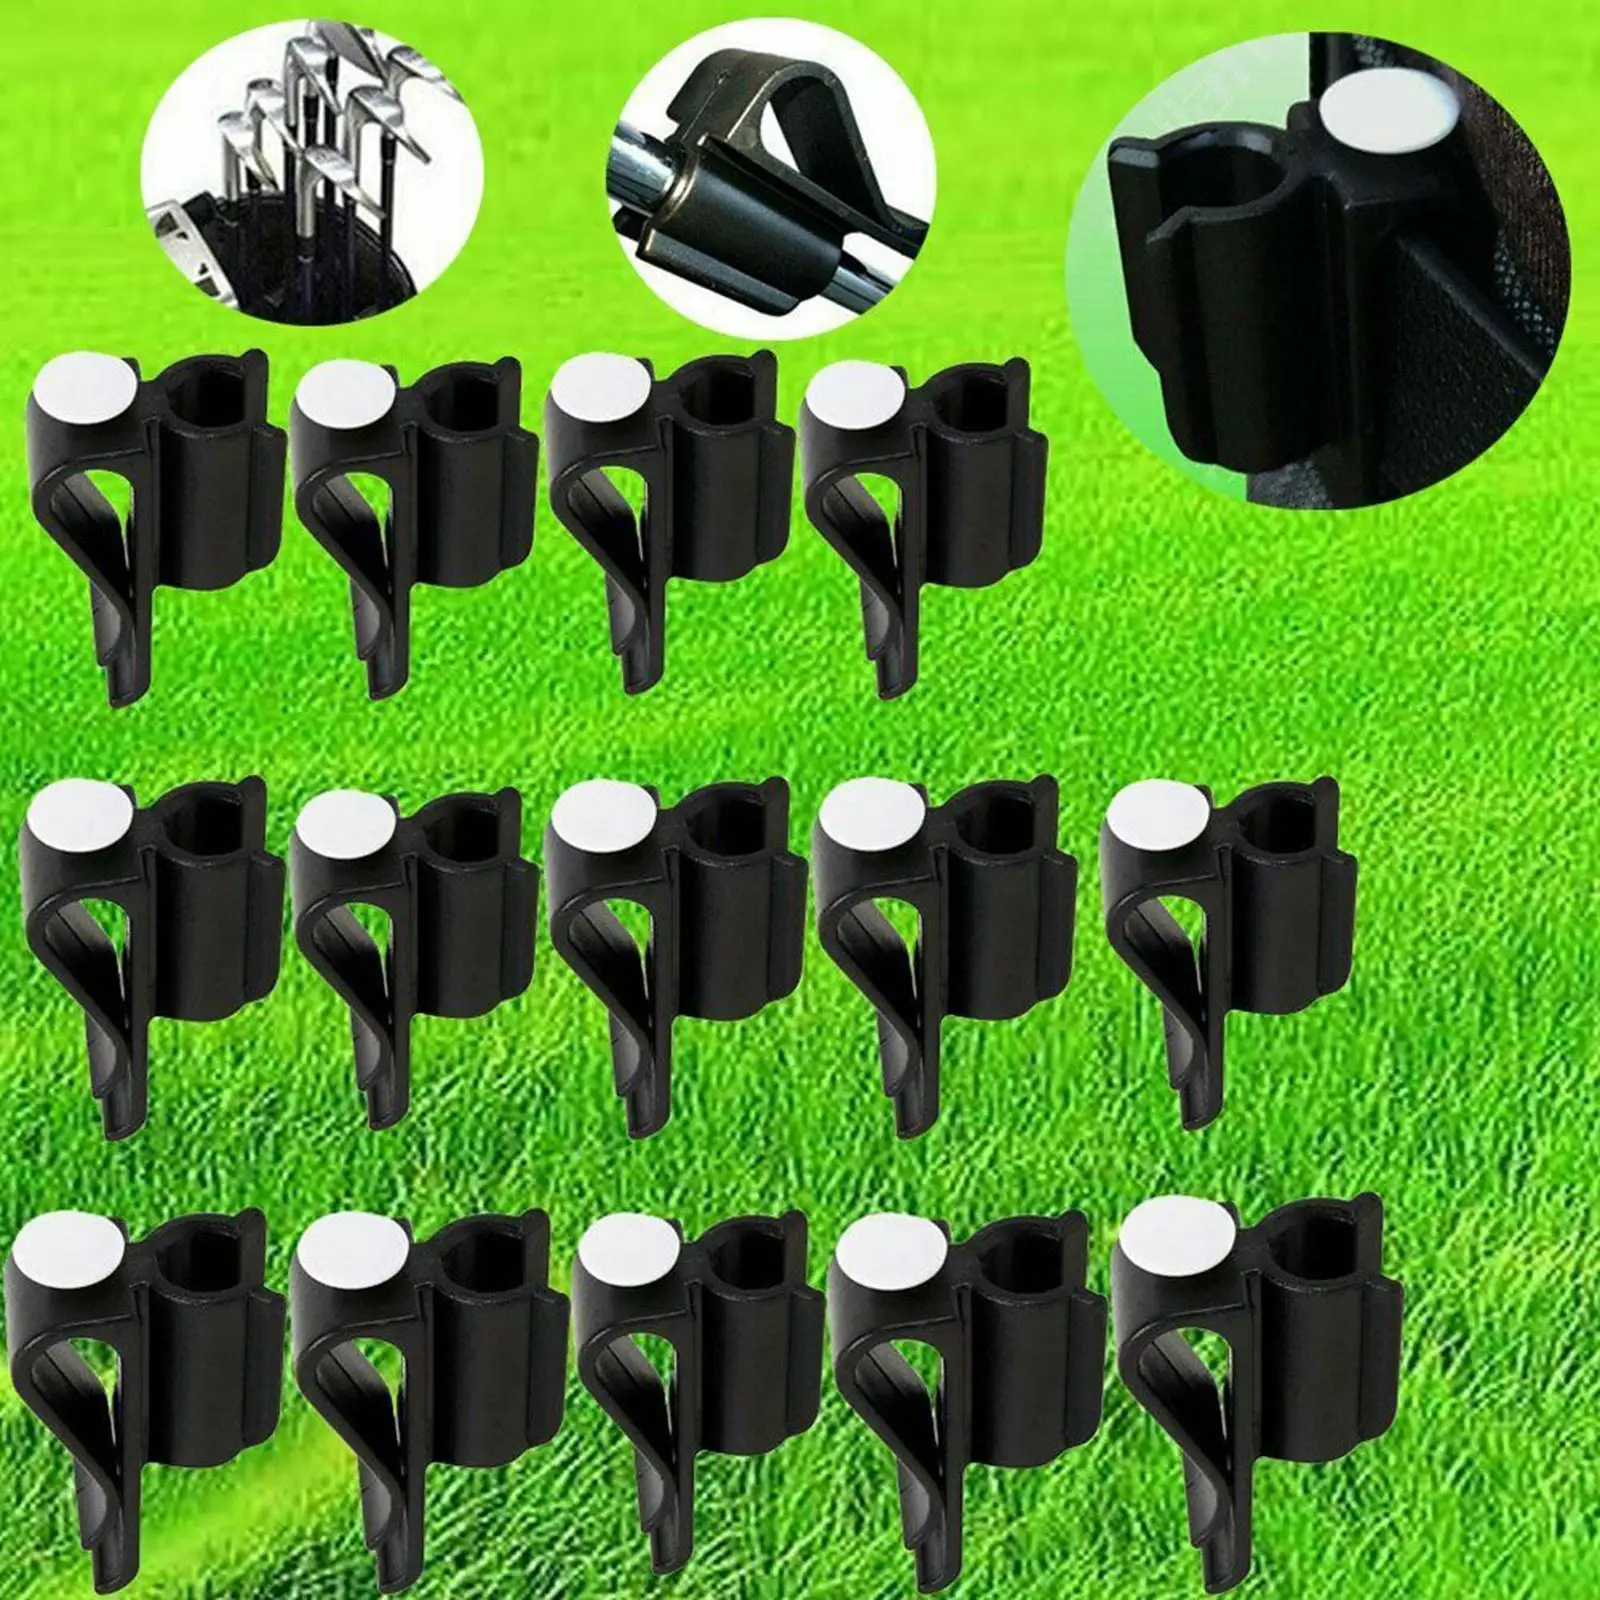 Durable Plastic Black Putting Clip Golf Accessories for Men Women Golfer